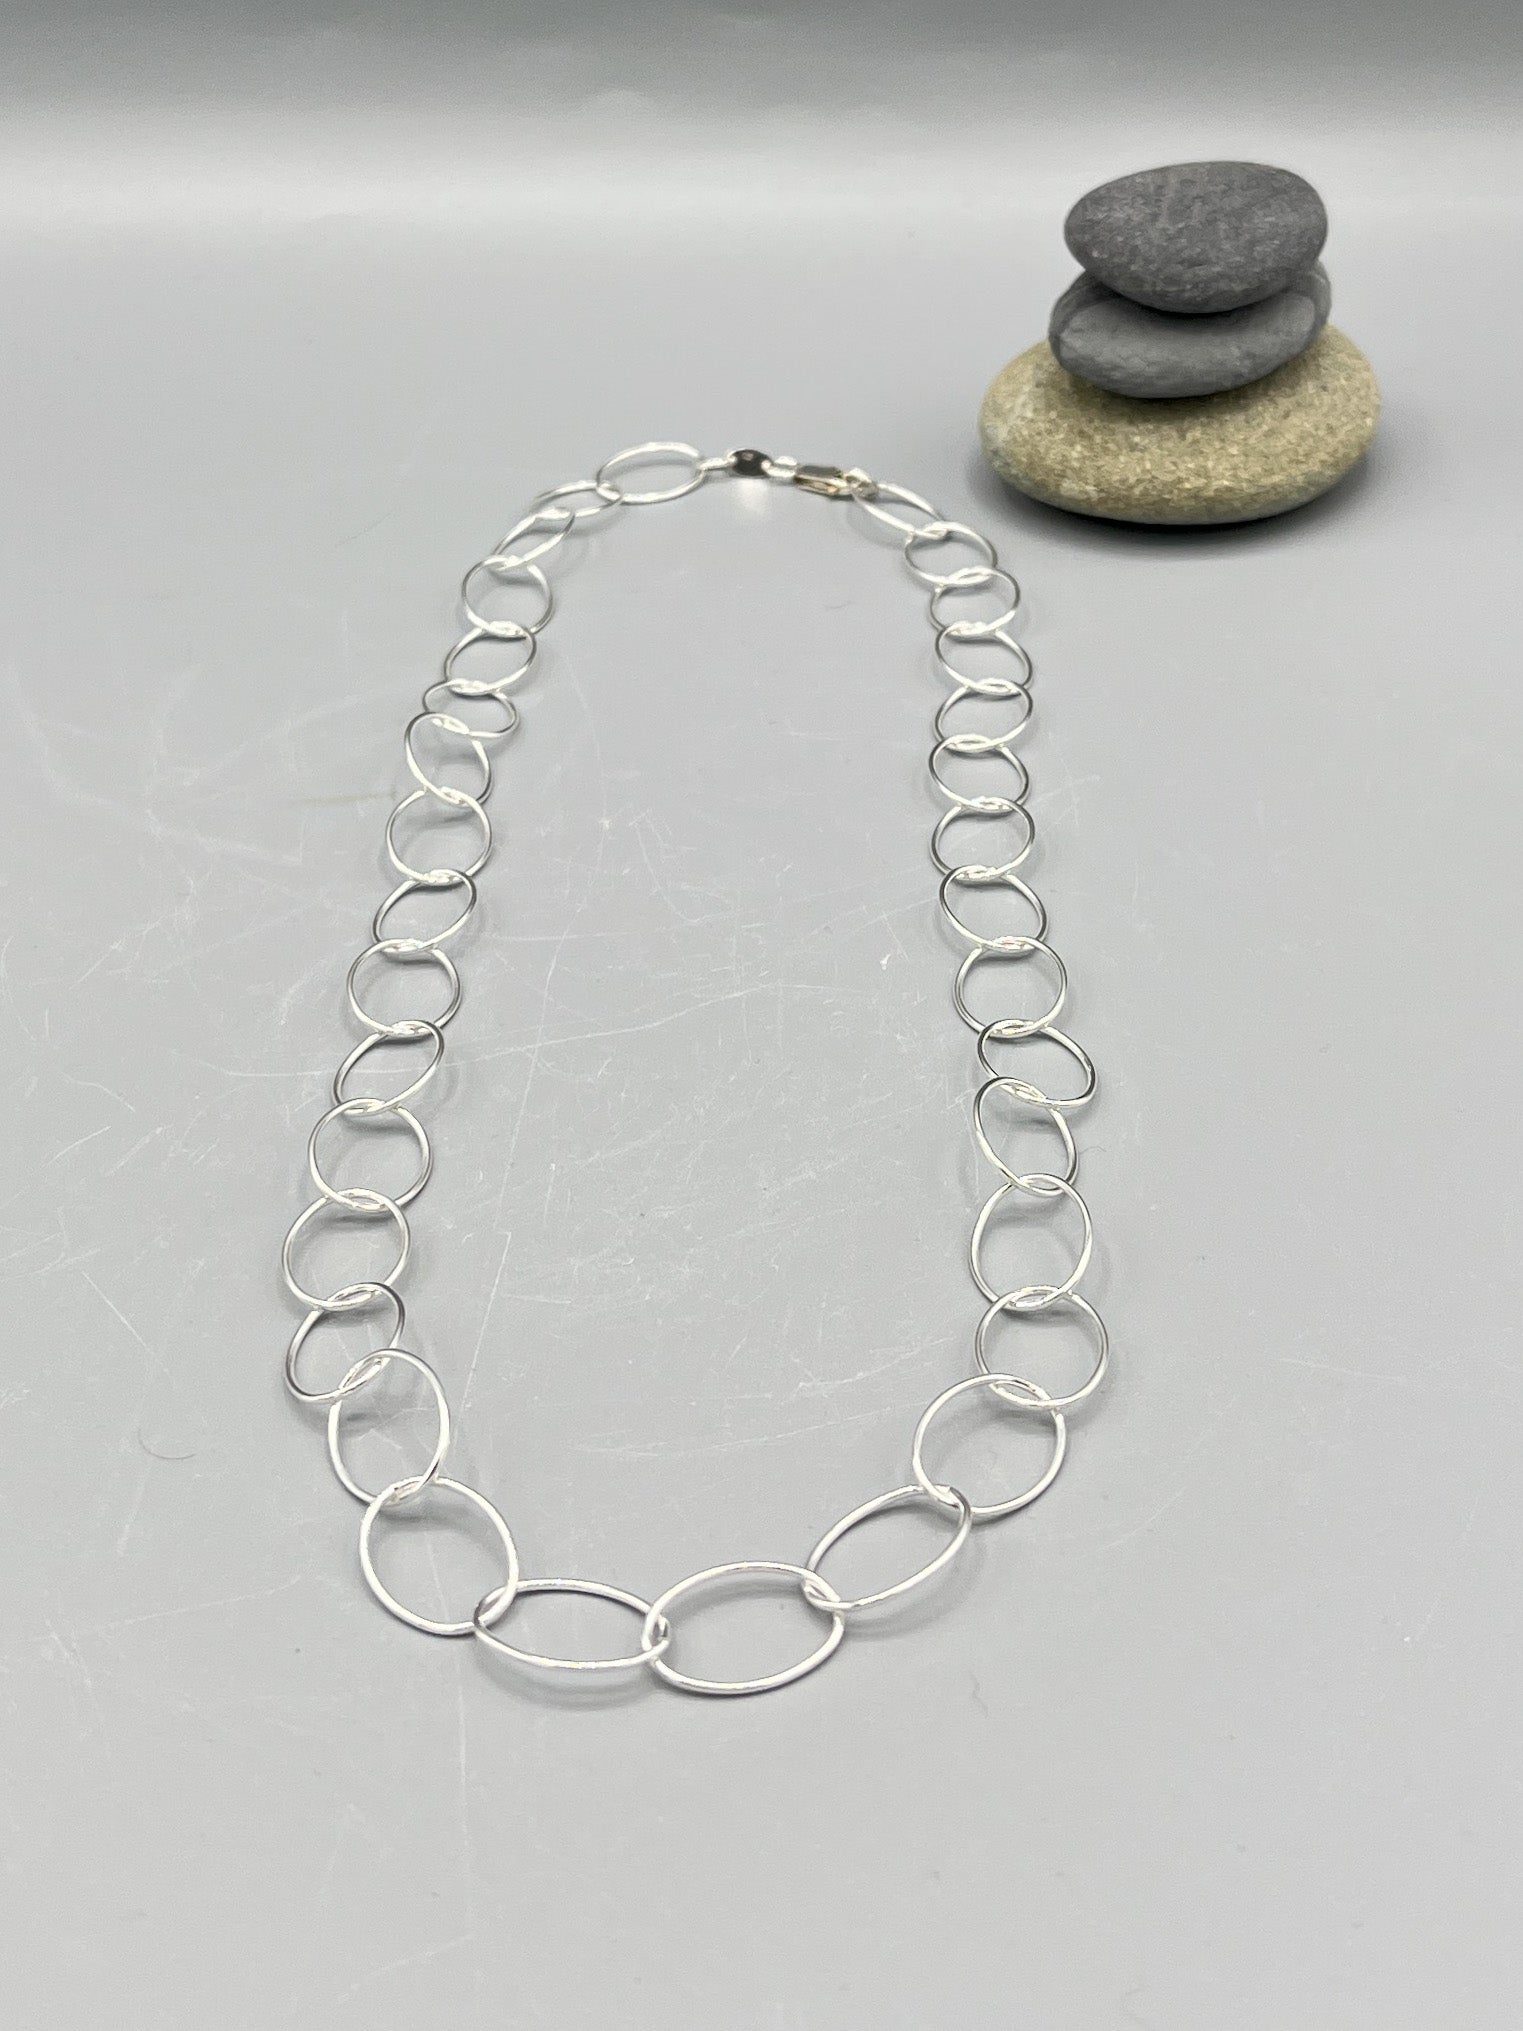 Sterling Silver Necklace. 21” long polished fancy oval link necklace